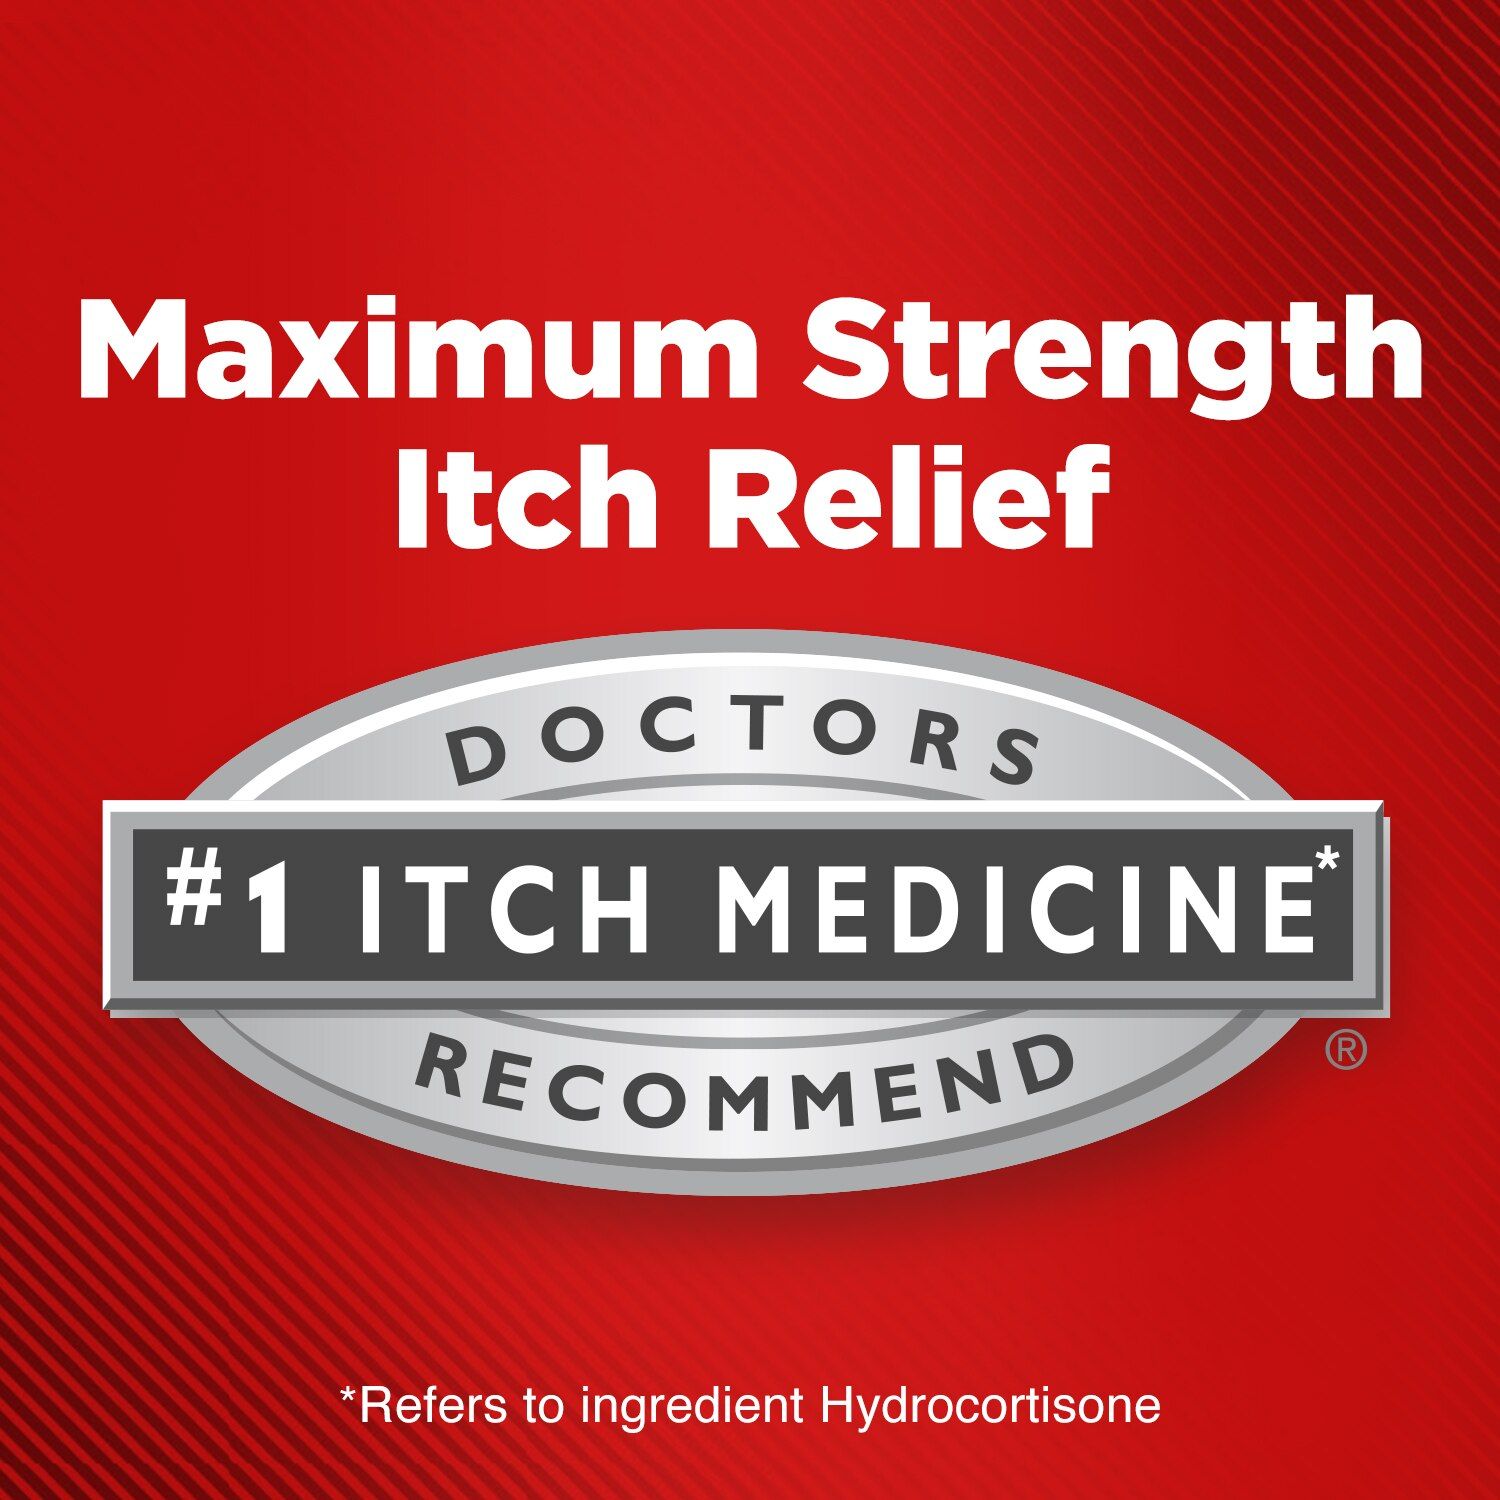 DISCCortizone 10 Intensive Healing Anti Itch Creme  - 1 oz